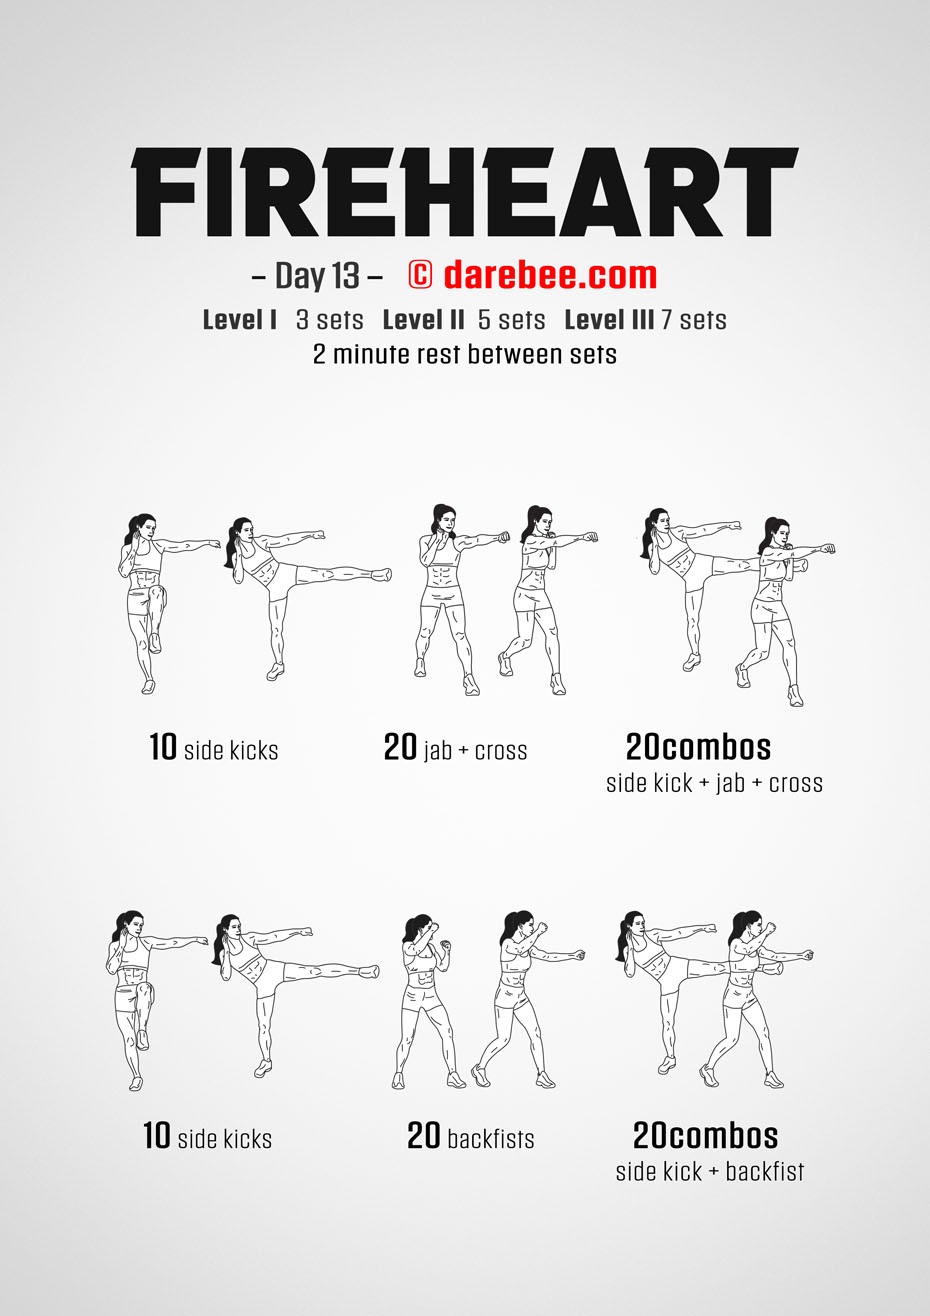 Fireheart - No-Equipment Fitness Program by DAREBEE